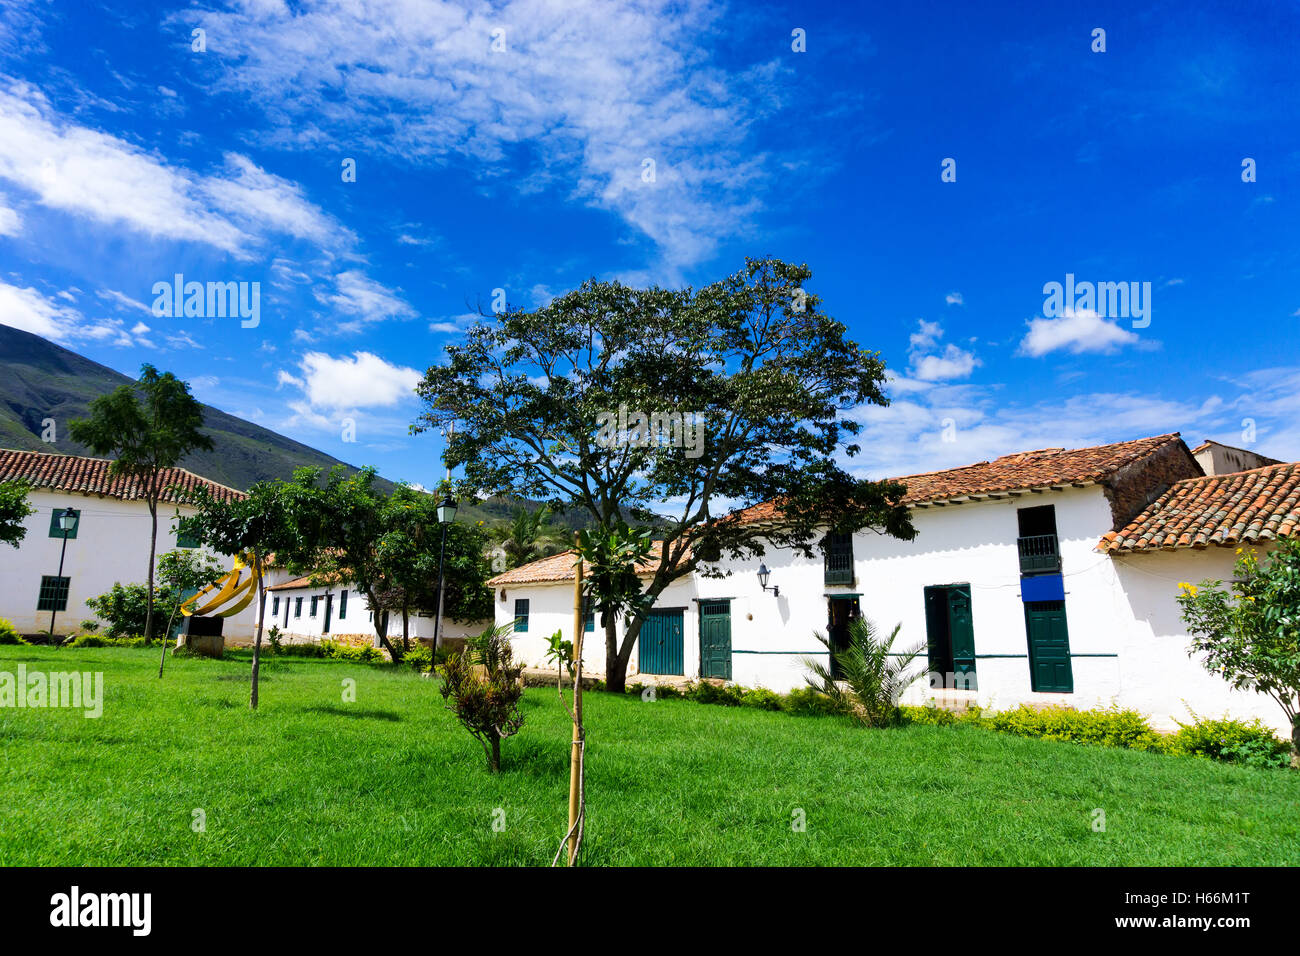 Üppig grünen Park und weißen Kolonialarchitektur in Villa de Leyva, Kolumbien Stockfoto